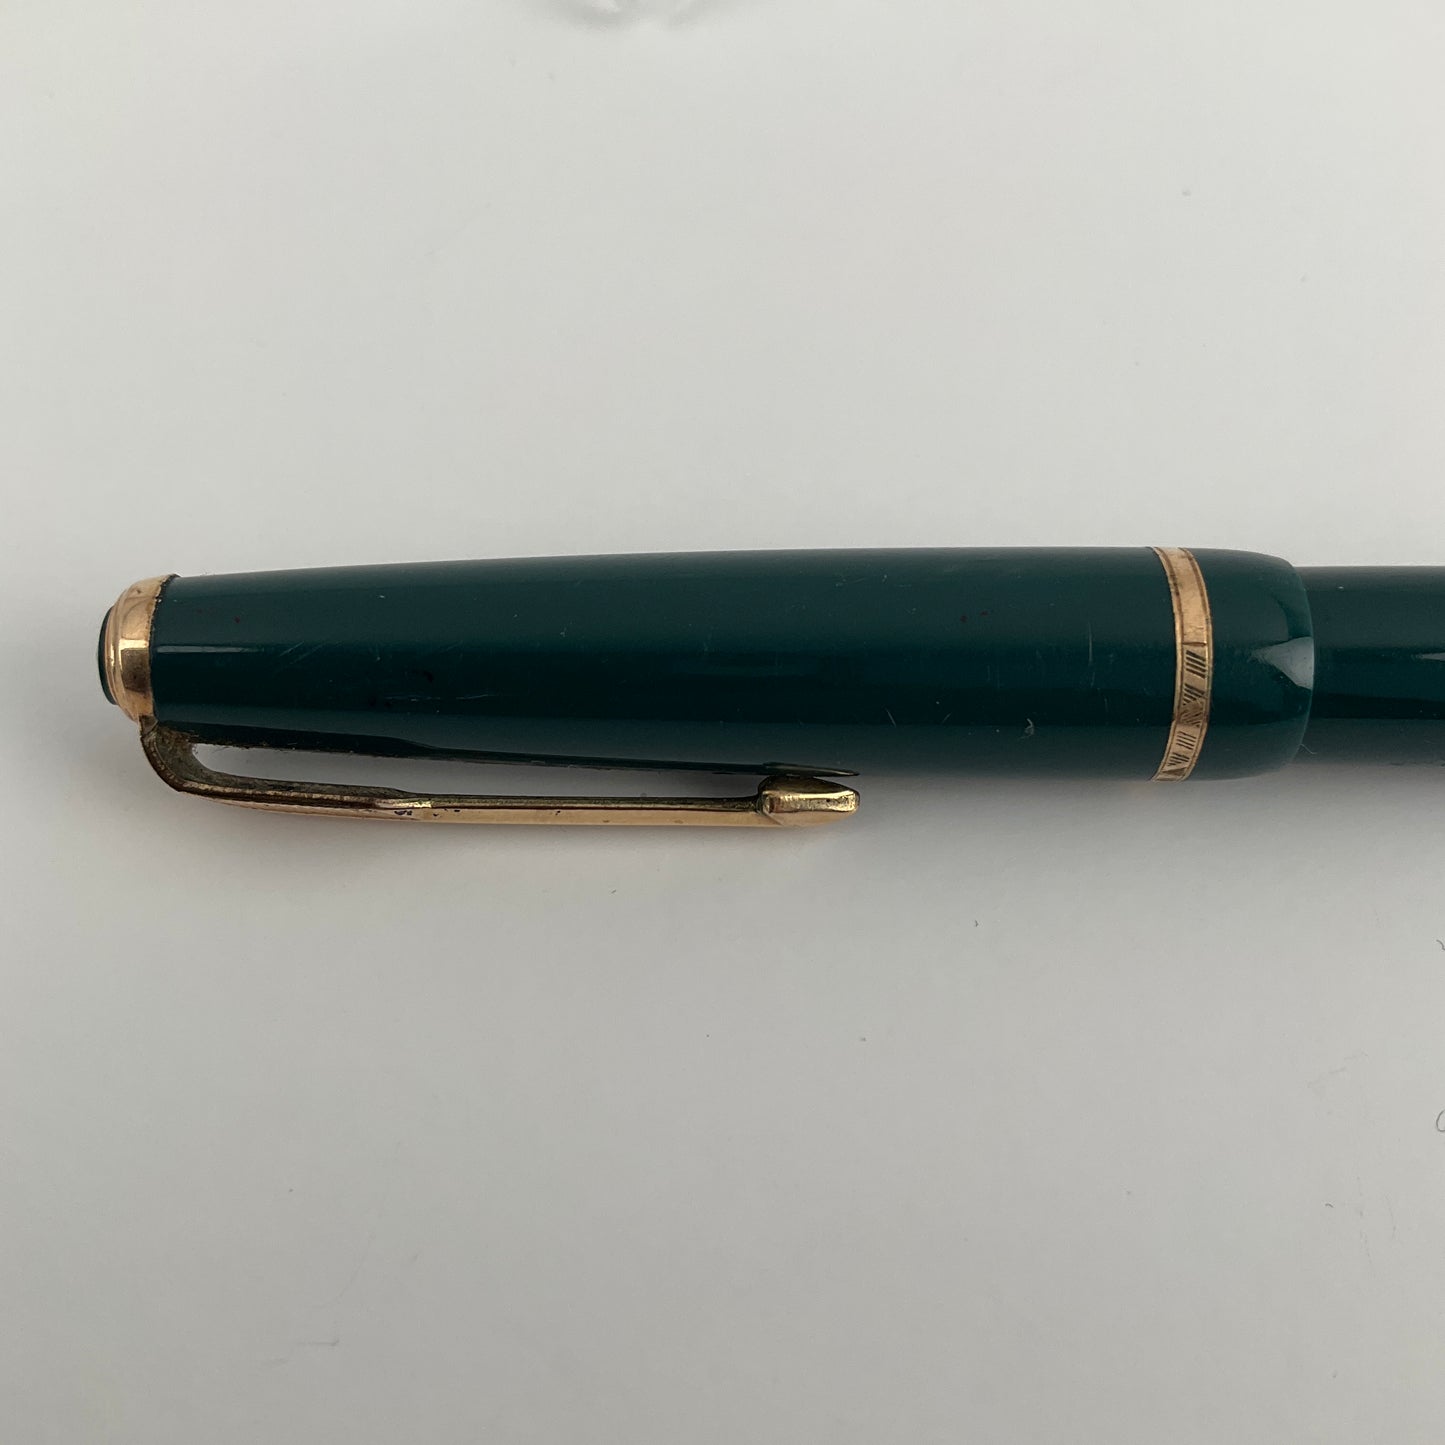 Parker - Green Slimfold Fountain Pen